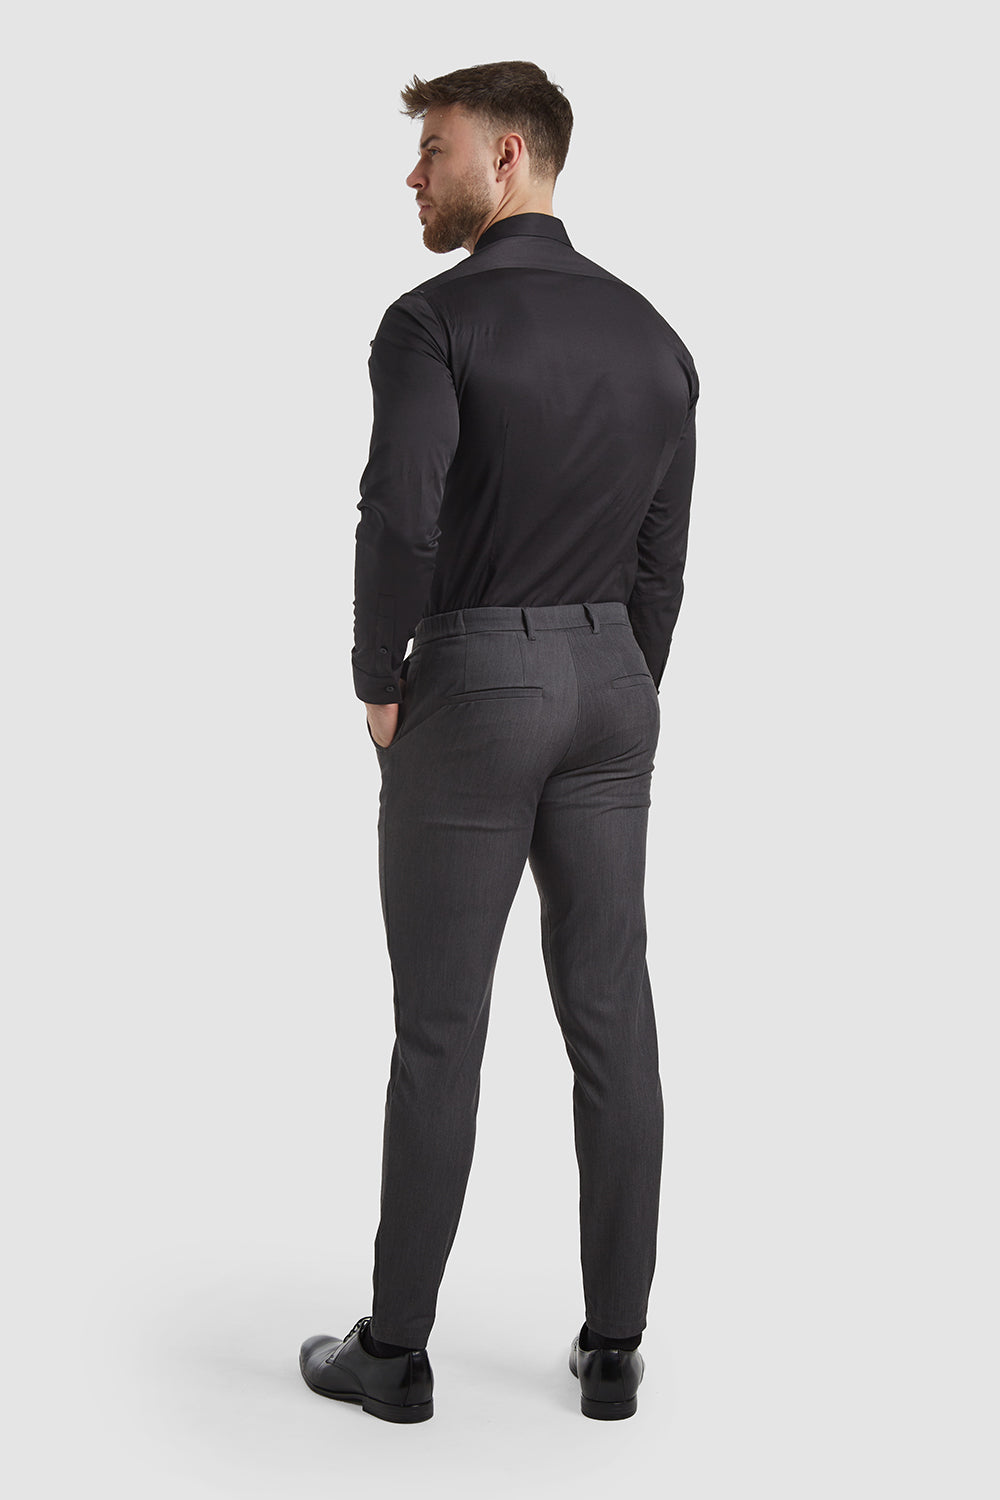 Buy Men Green Slim Fit Solid Casual Trousers Online  567249  Allen Solly